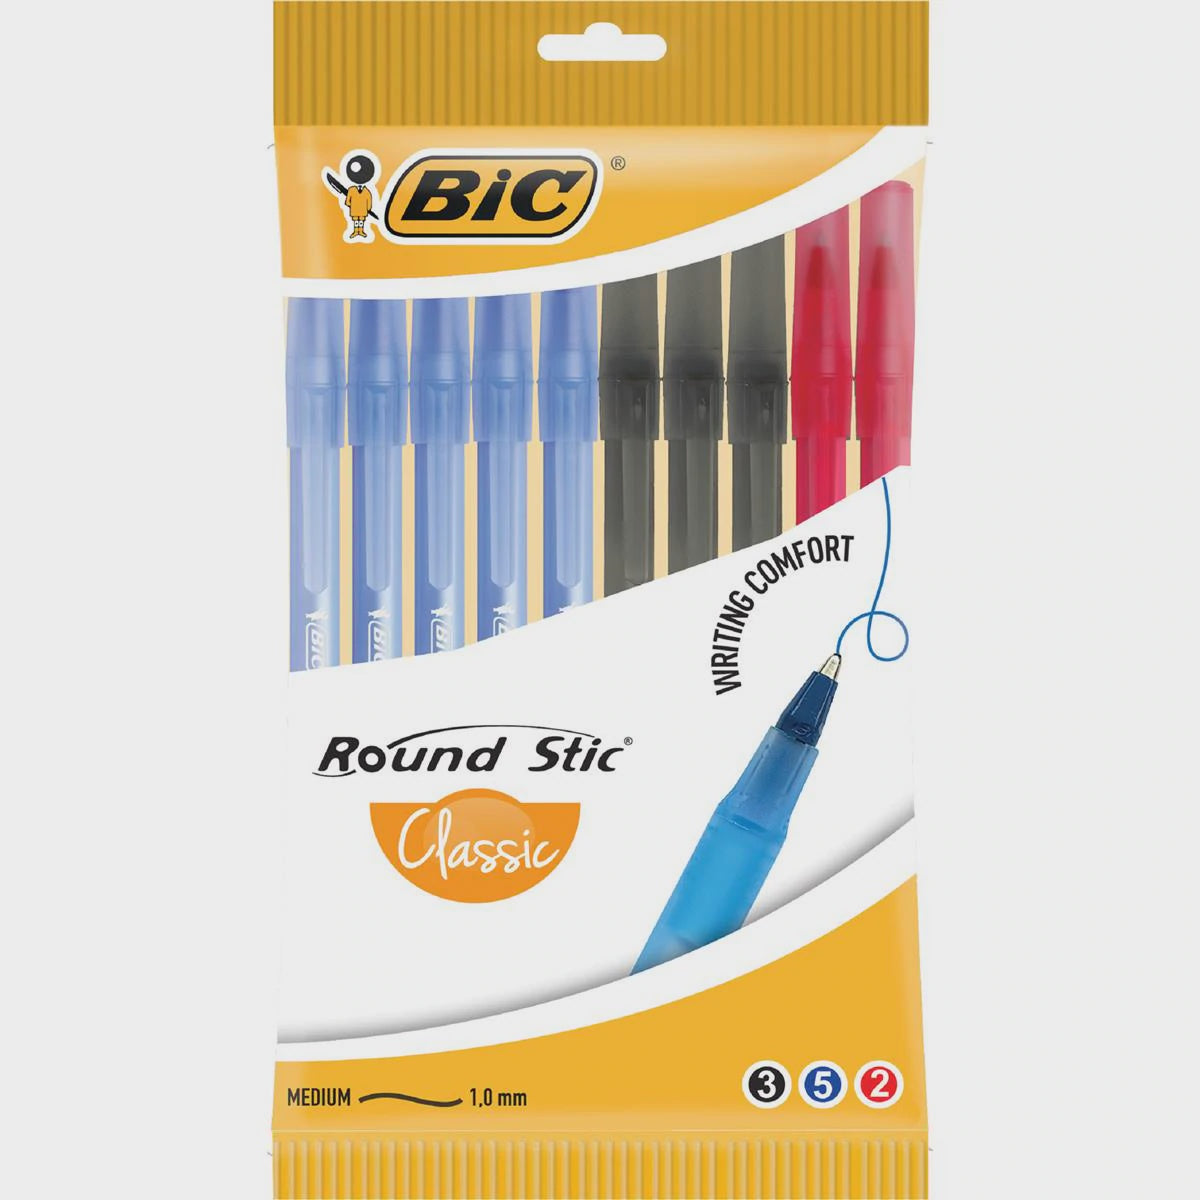 Bic Pen Round Stick Assorted 10pk